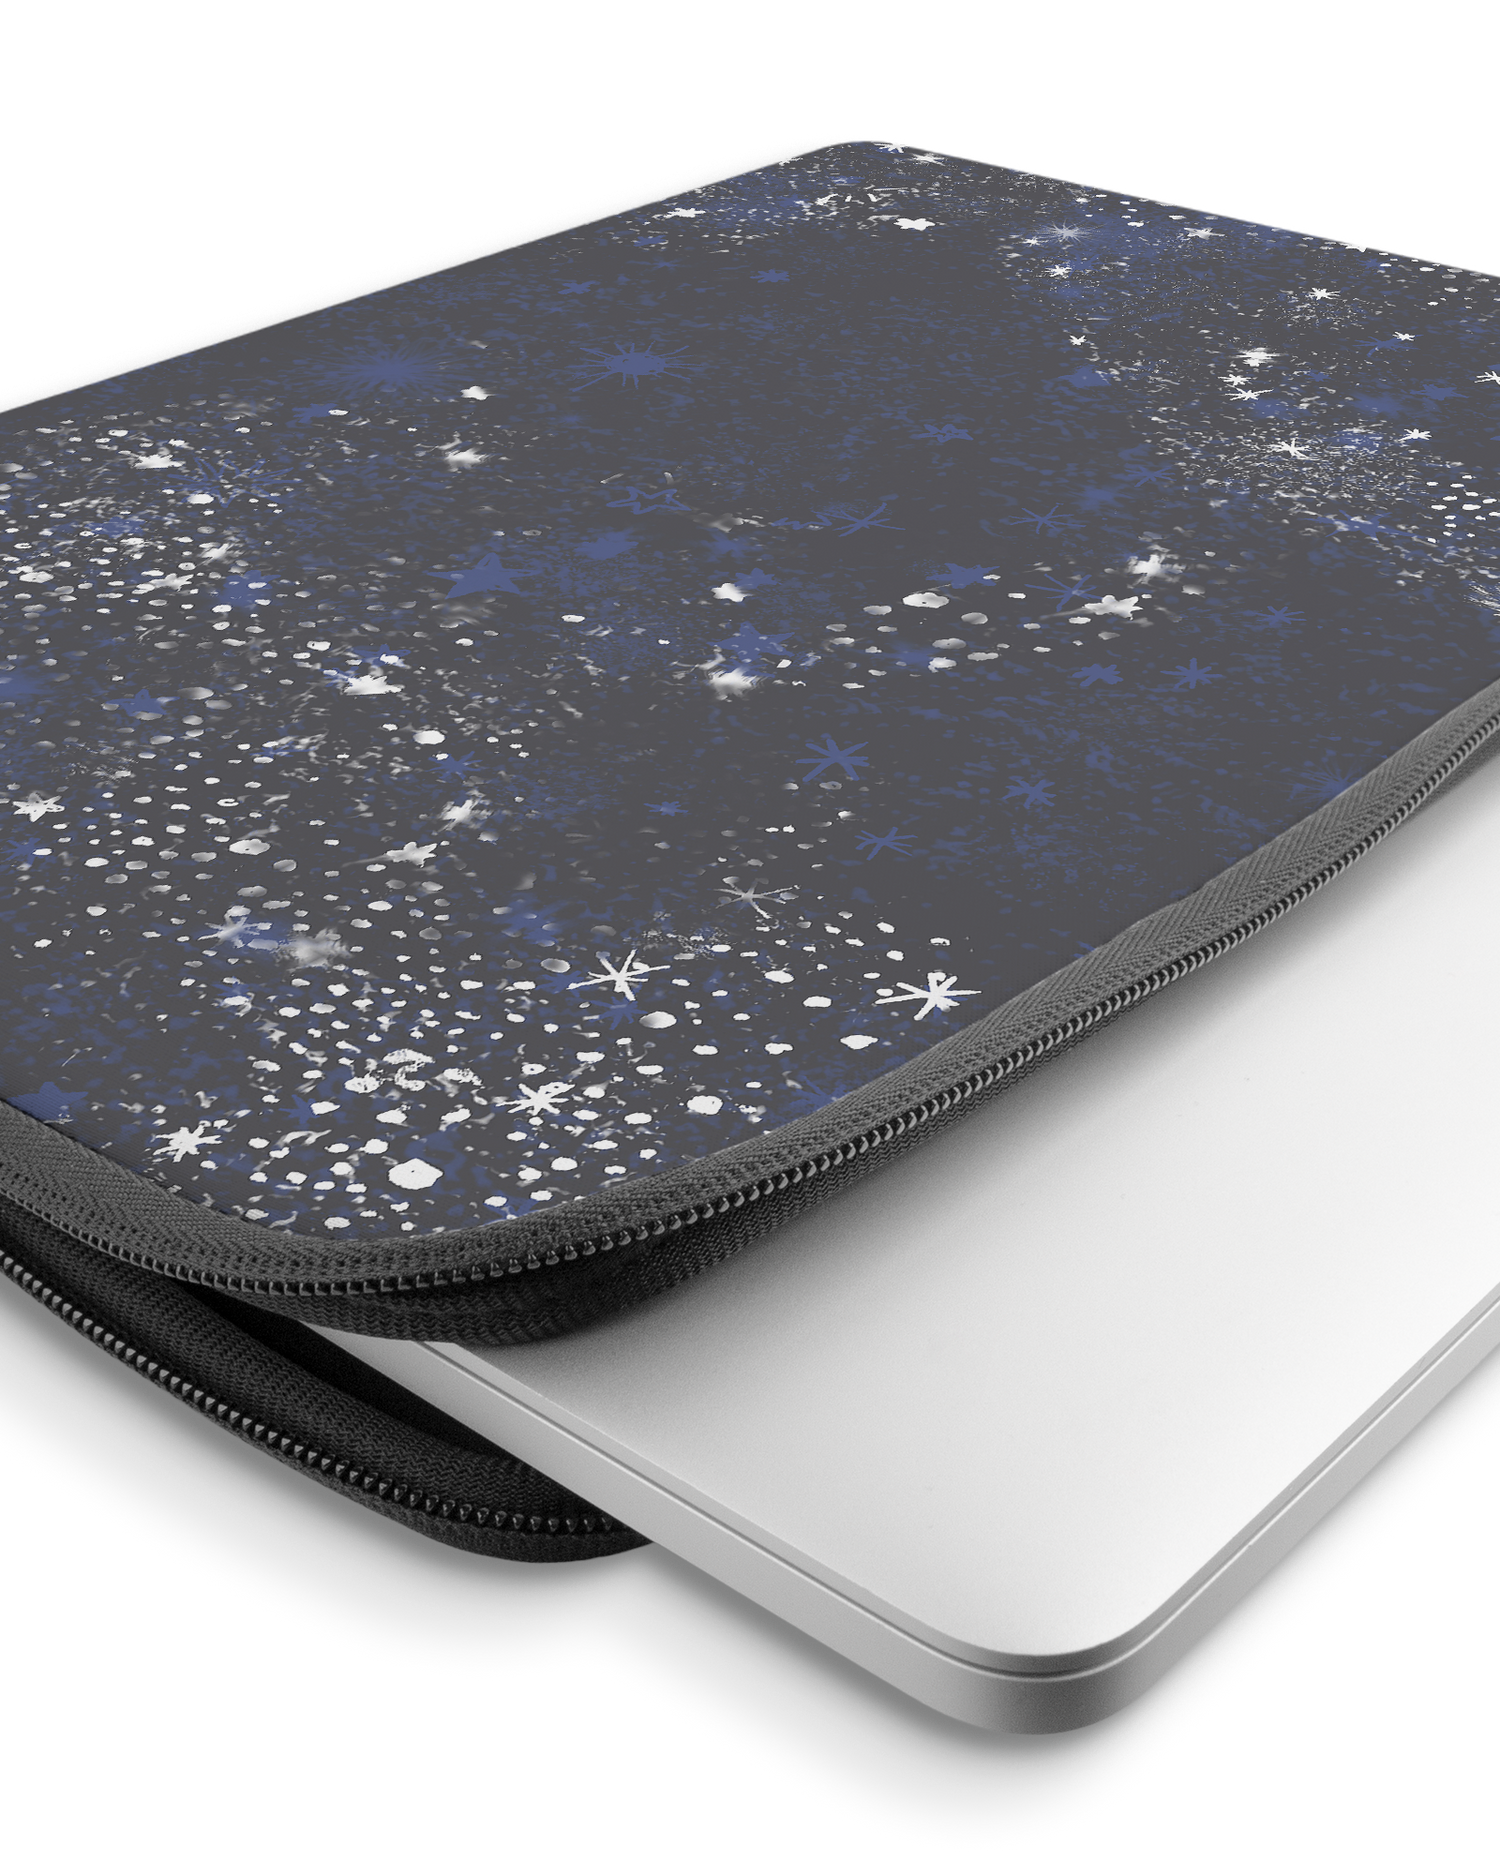 Starry Night Sky Laptop Case 15-16 inch with device inside